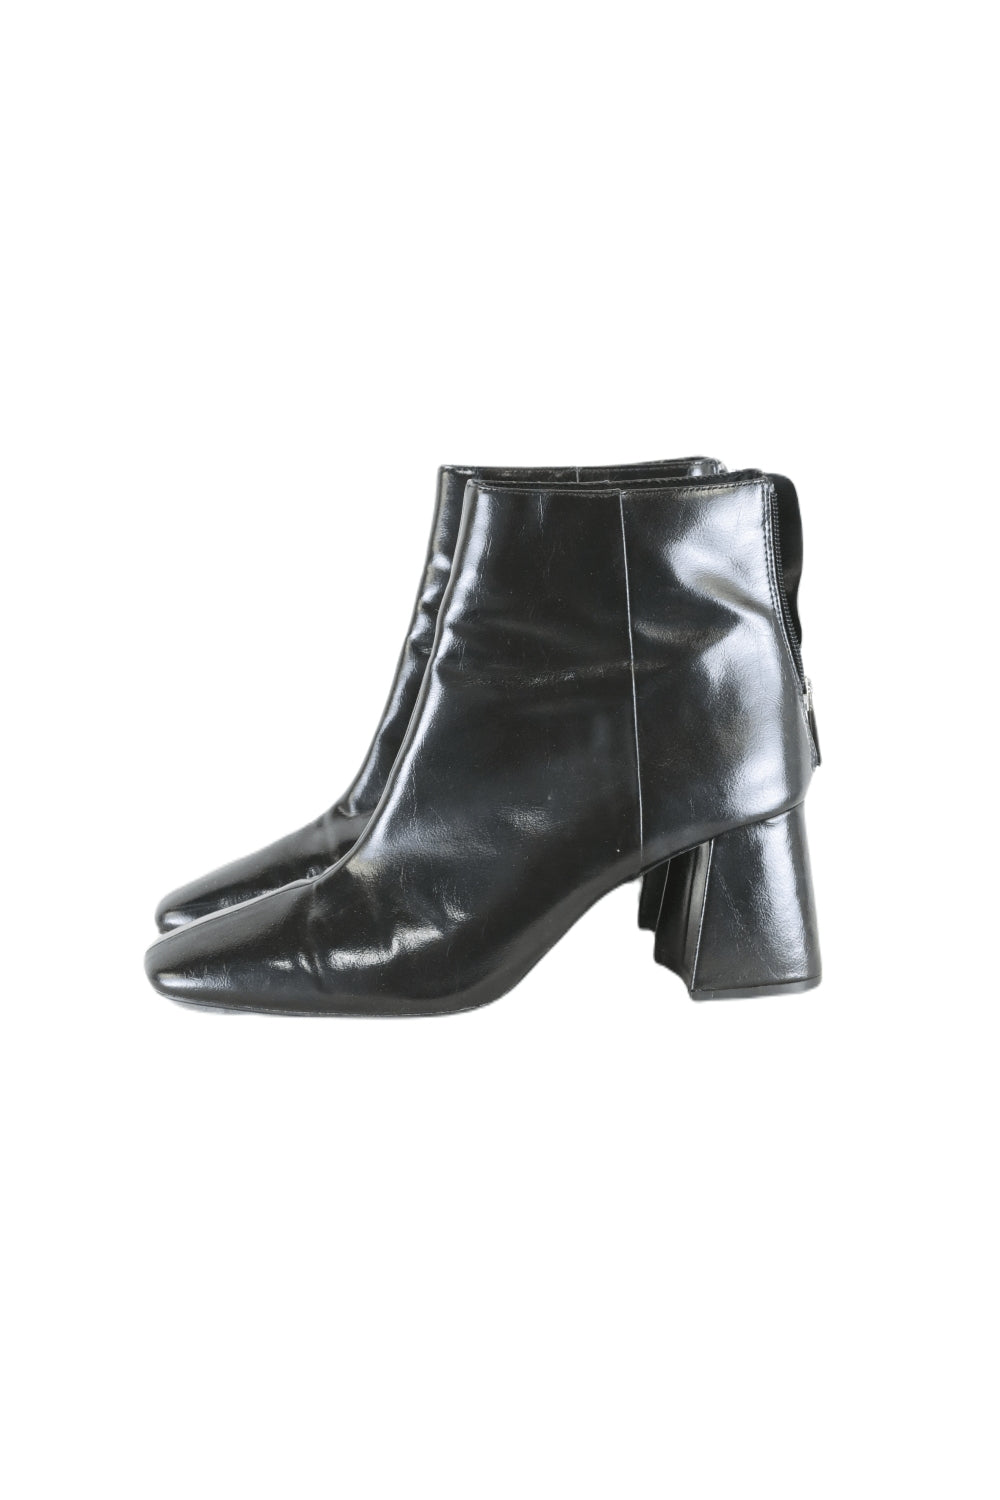 Zara Black Boots 40